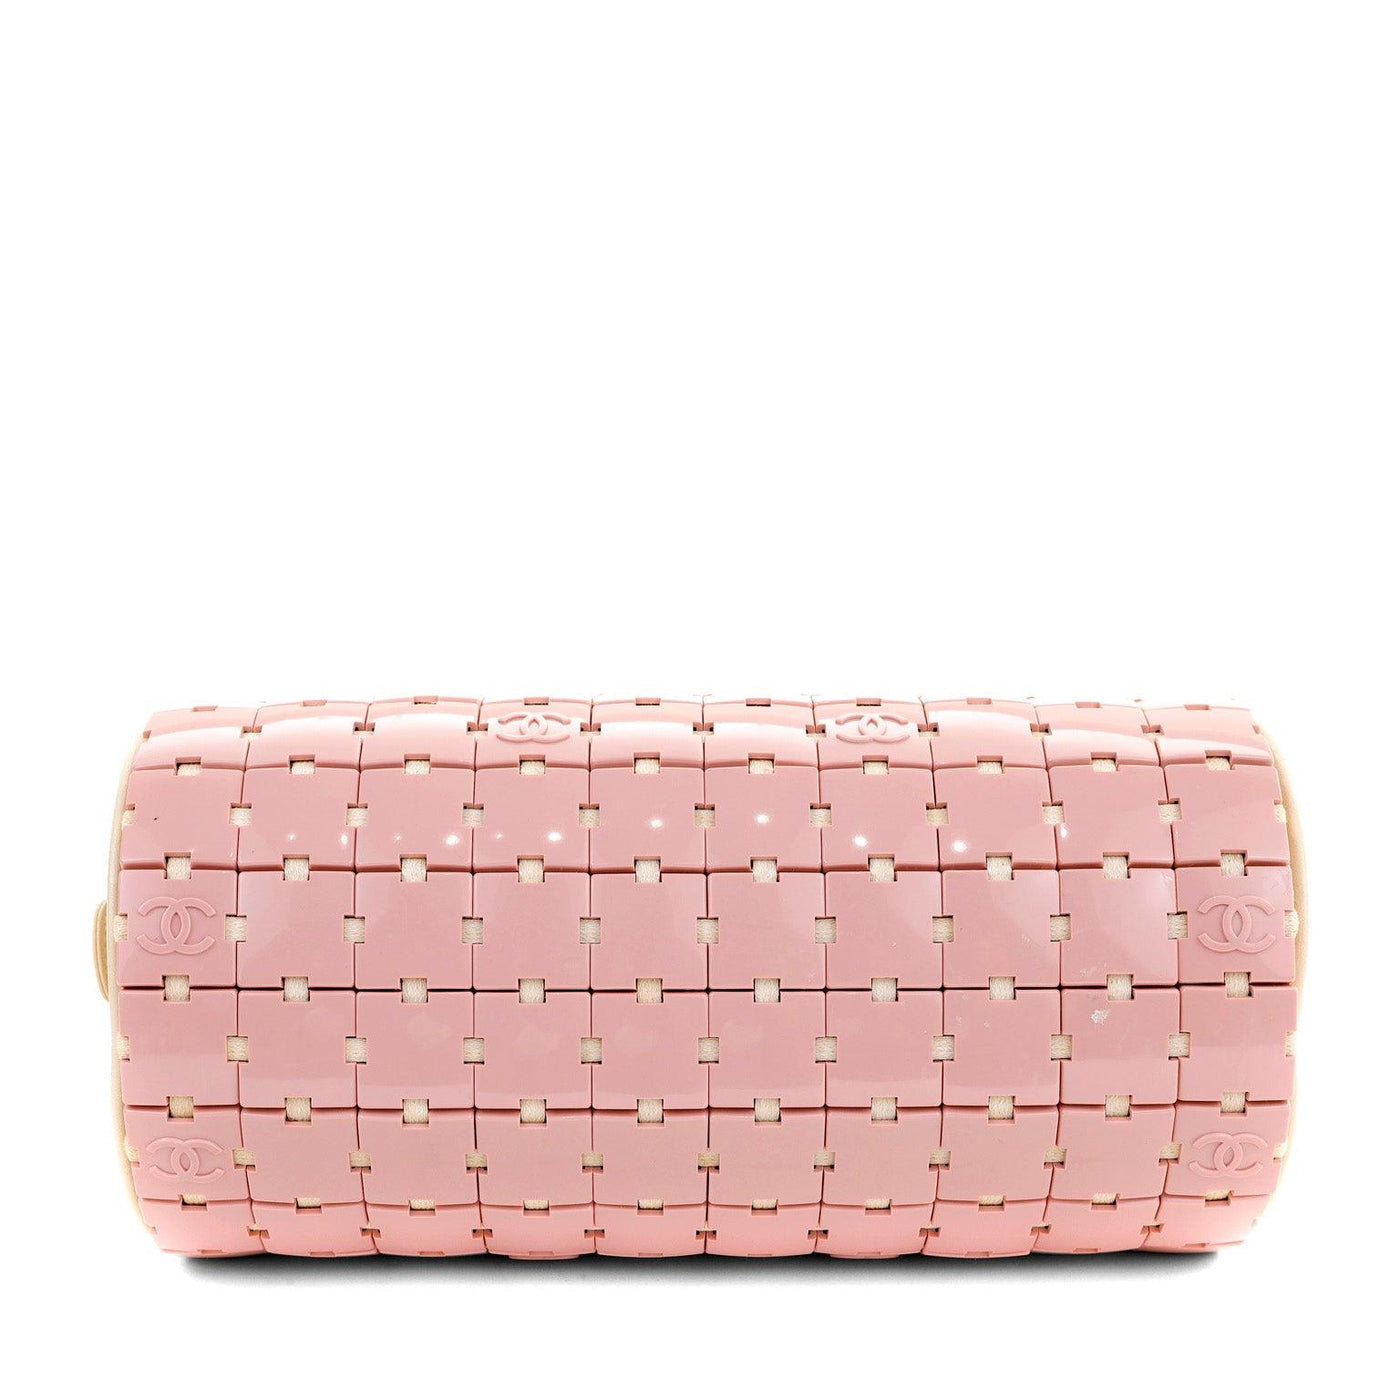 Chanel Pink and Beige Lucite Puzzle Mini Barrel Duffel Handbag RARE - Only Authentics